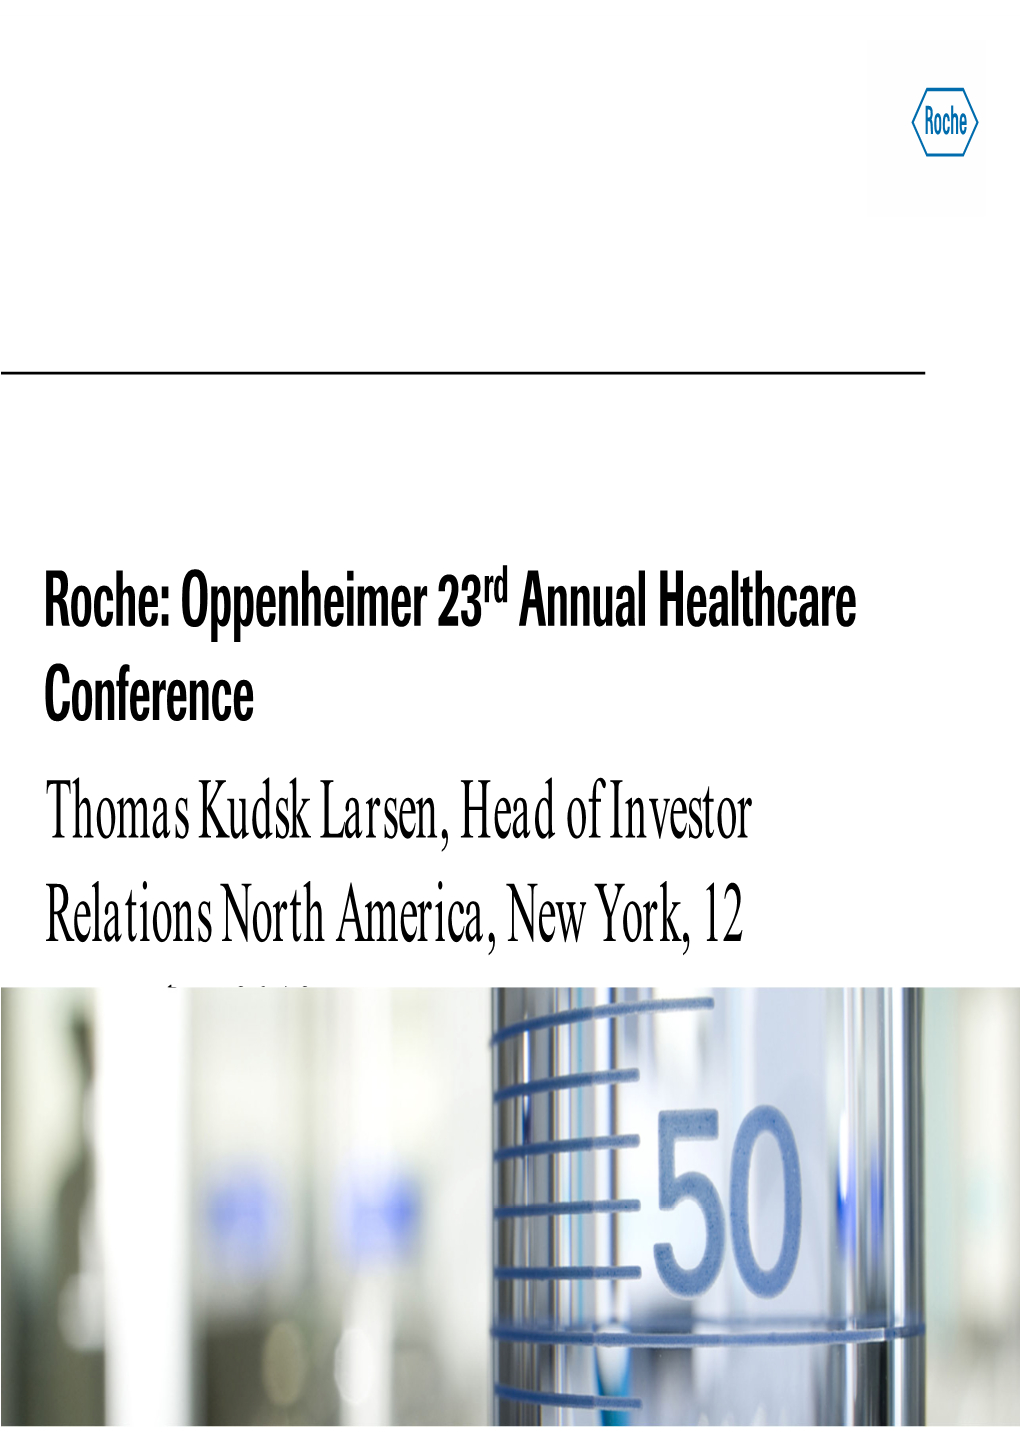 Roche Investor Presentation Oppenheimer 23Rd Annual